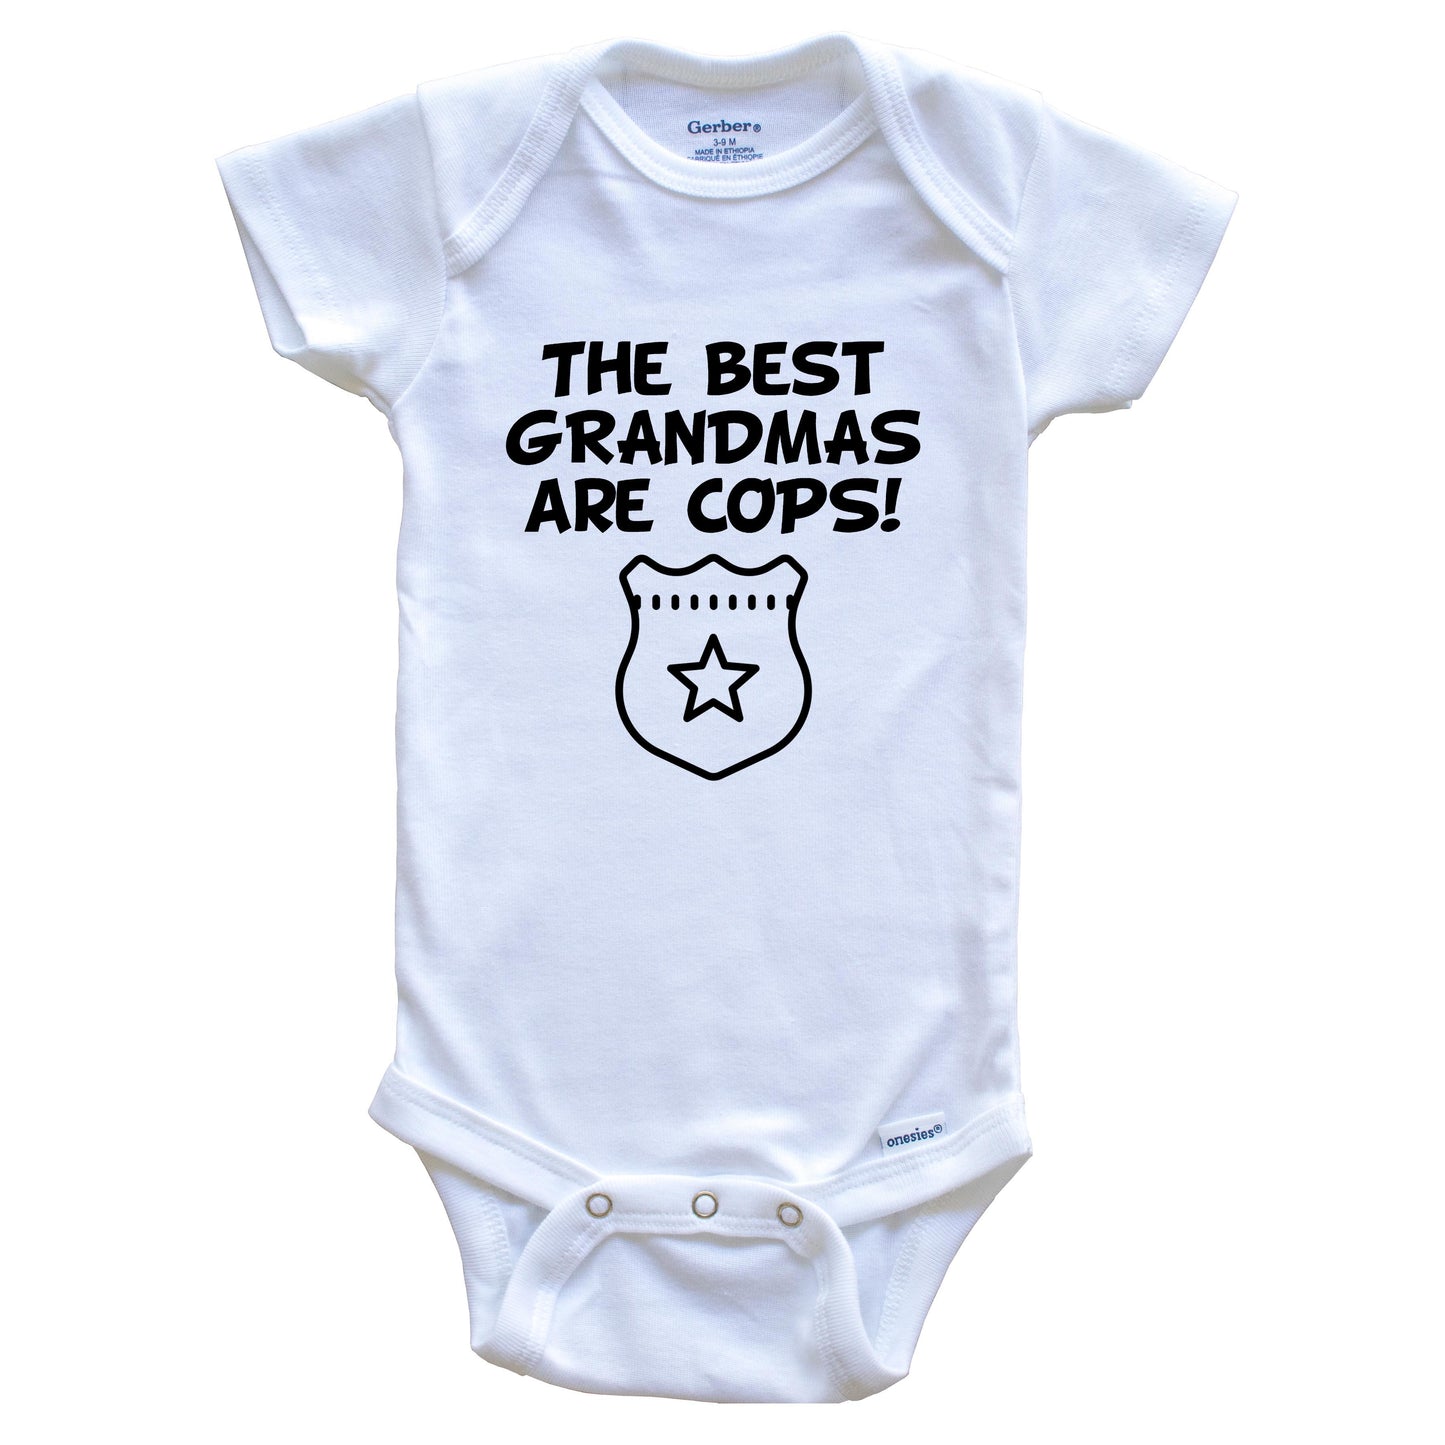 The Best Grandmas Are Cops Funny Grandchild Baby Onesie